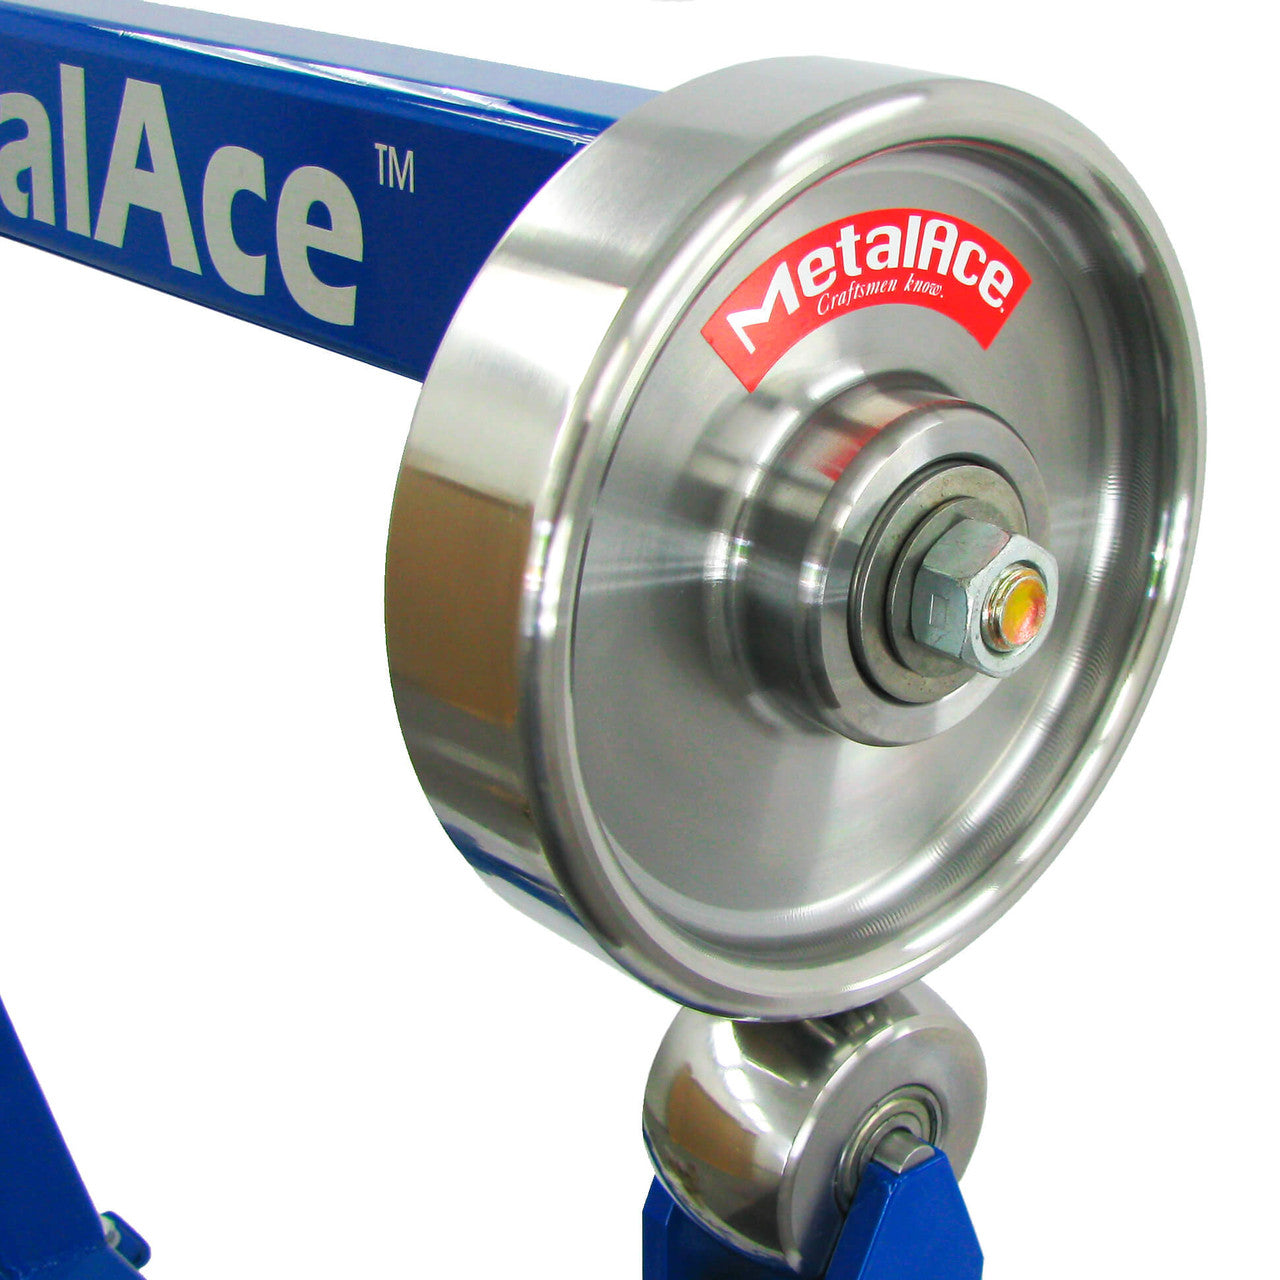 MetalAce 22B English Wheel 8" upper wheel and lower anvil